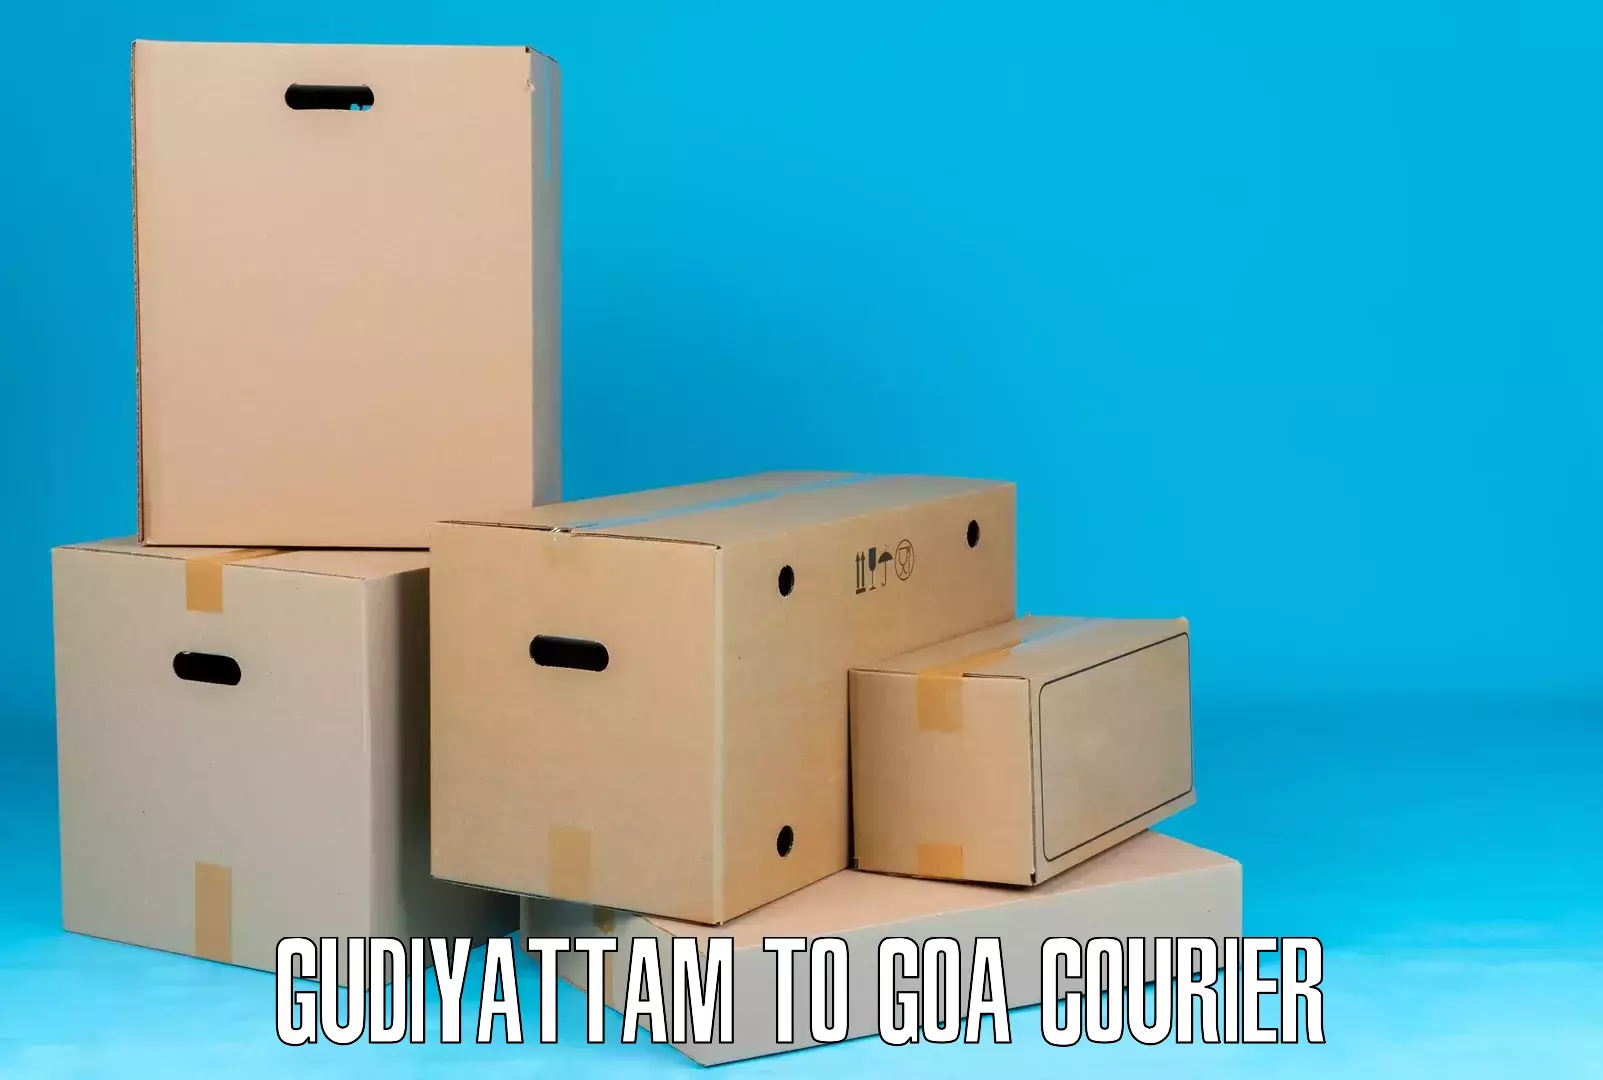 Courier service innovation Gudiyattam to South Goa